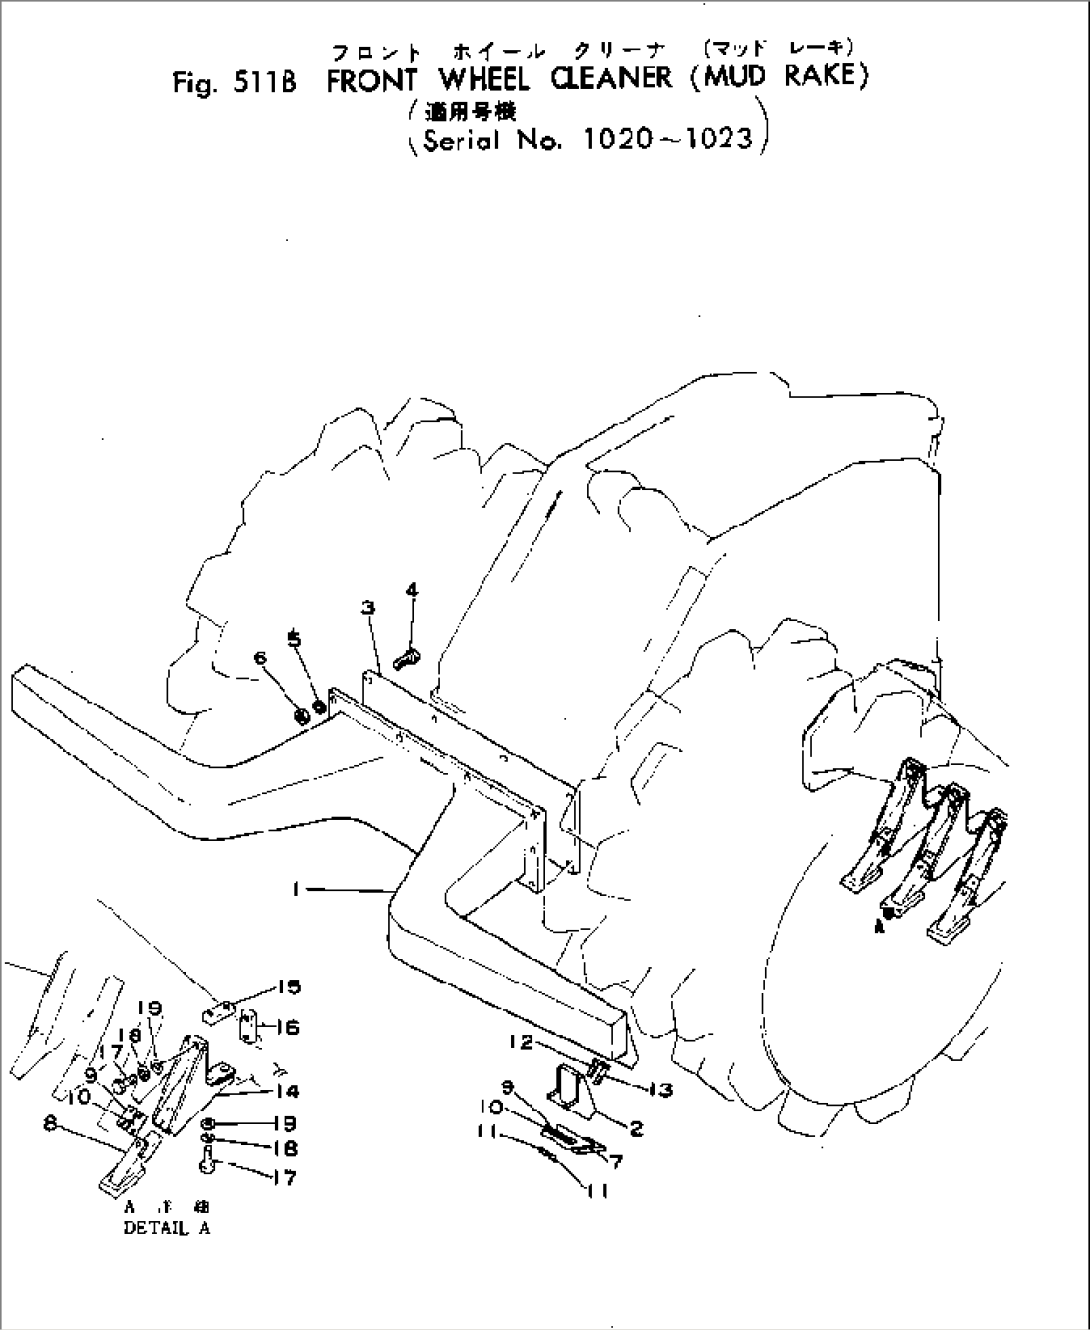 FRONT WHEEL CLEANER (MUD RAKE)(#1020-1023)